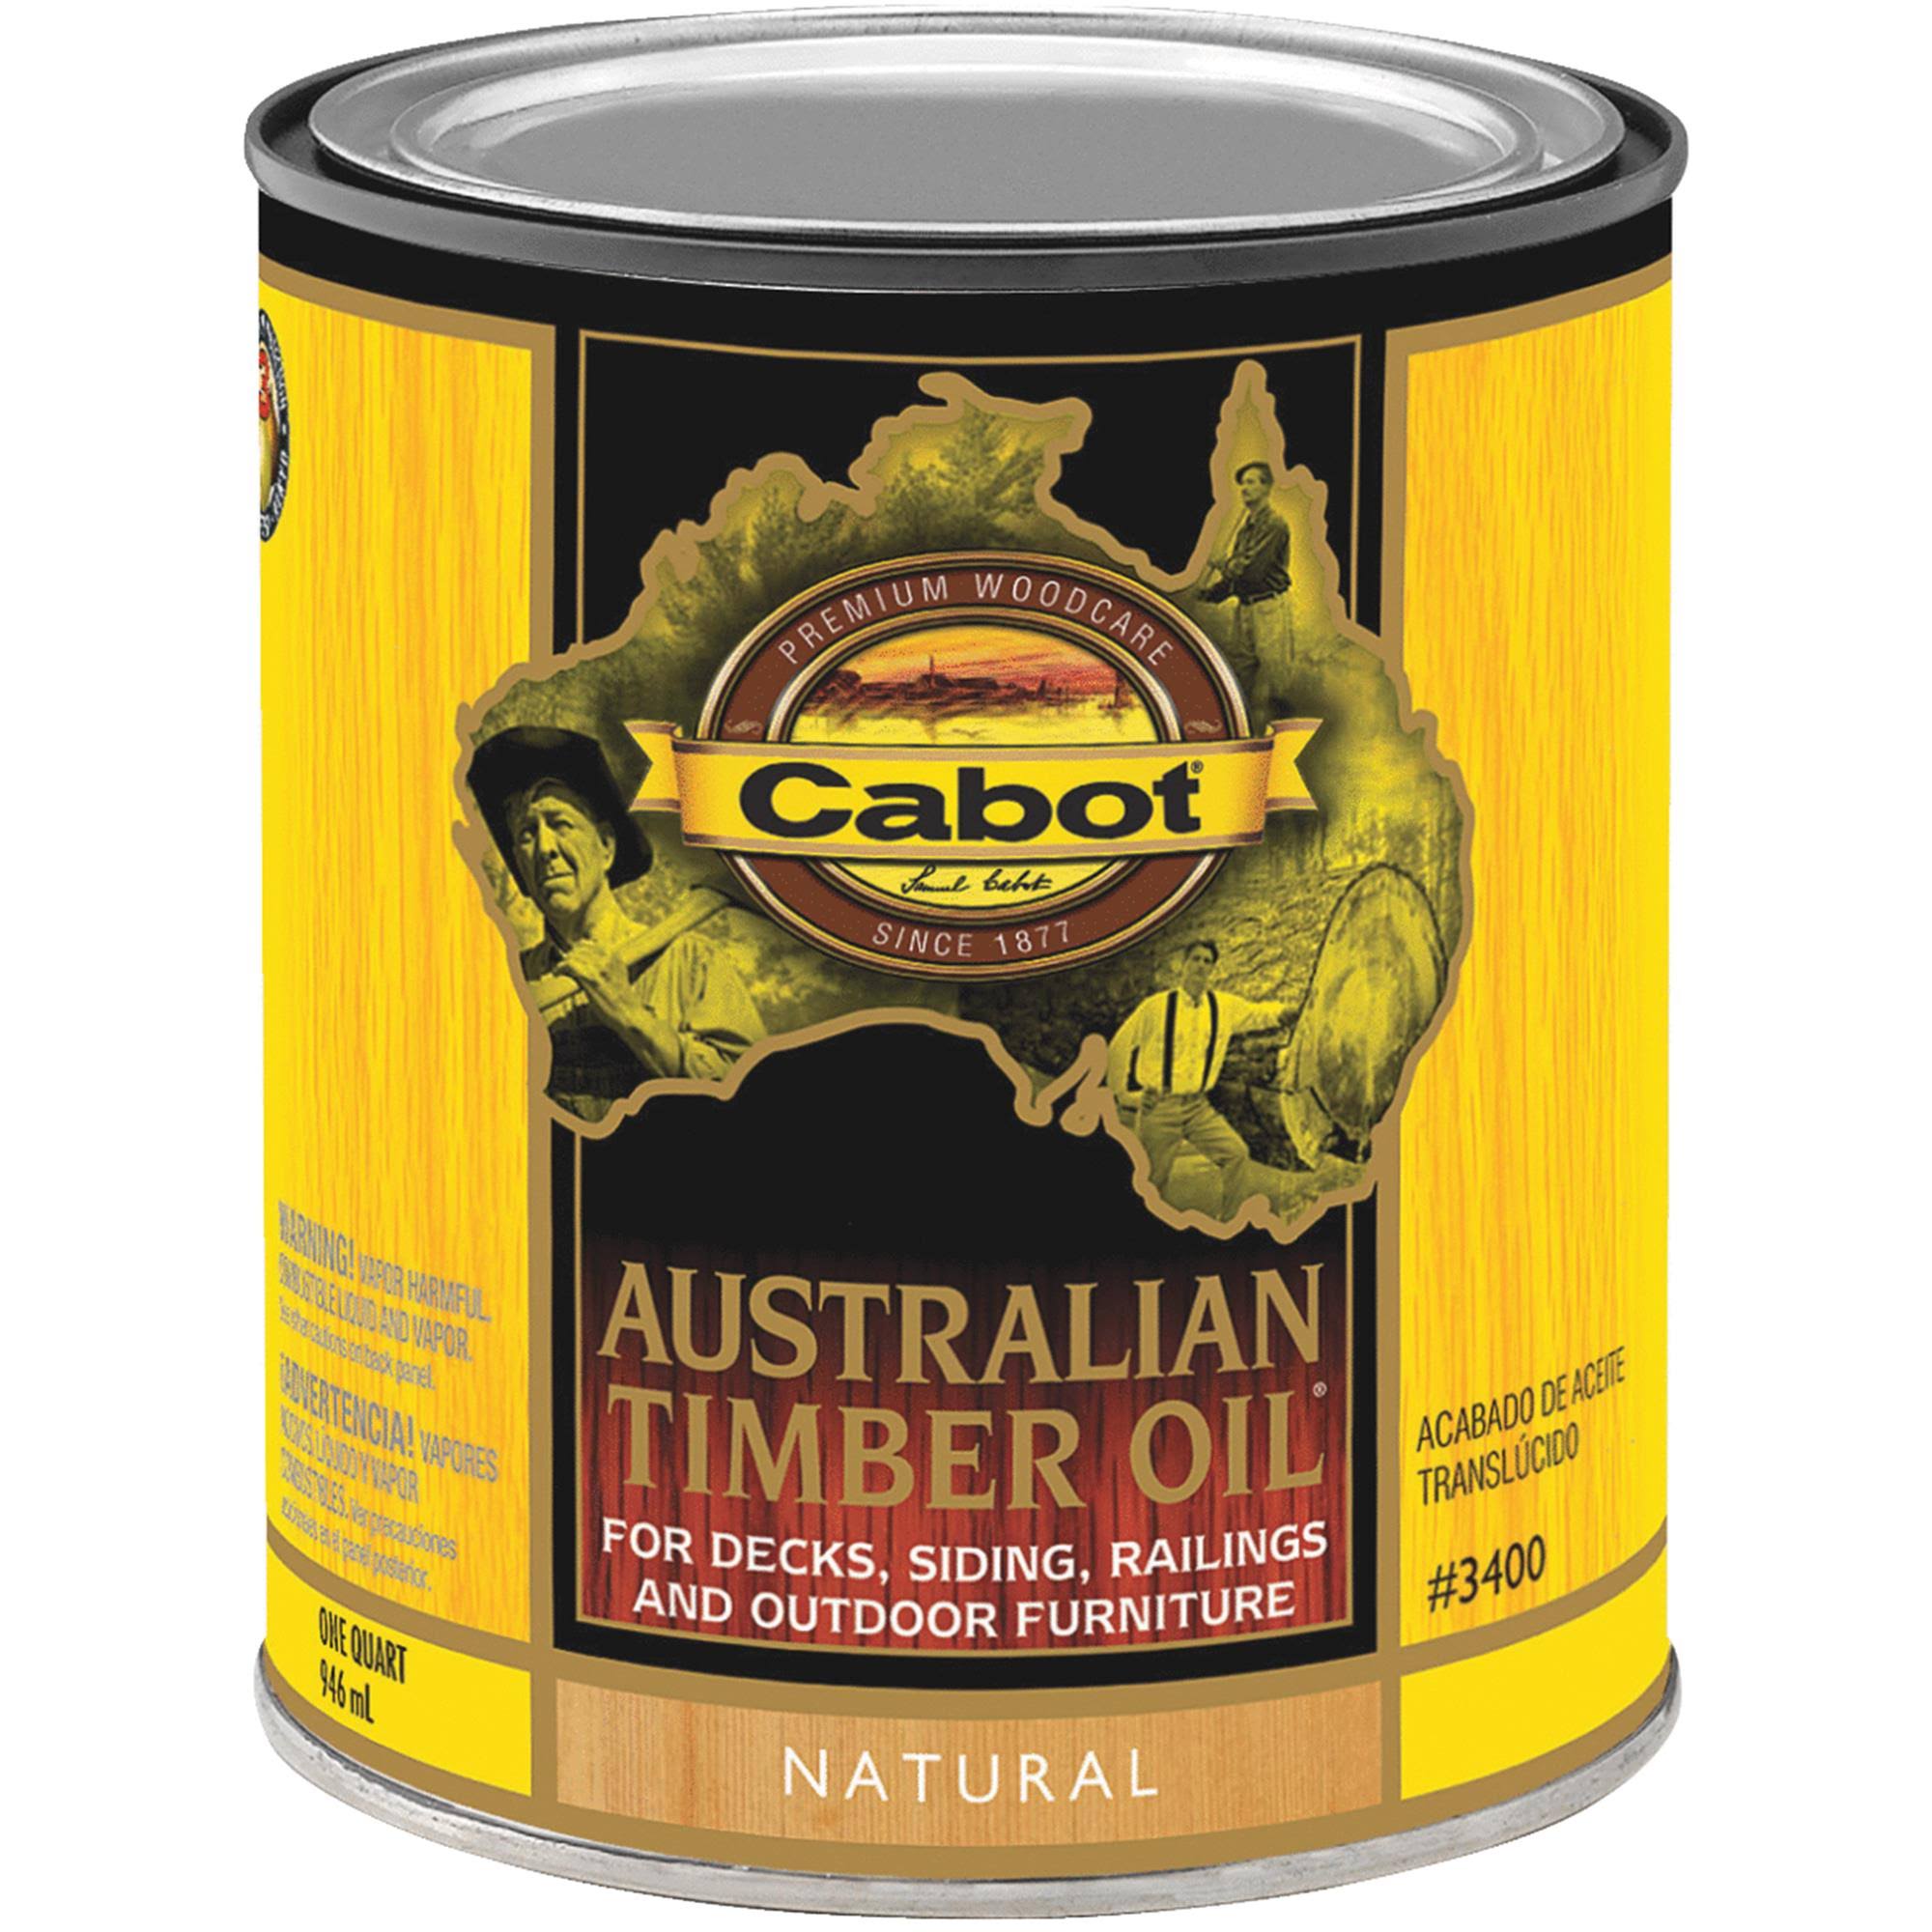 Cabot Australian Timber Oil - Natural